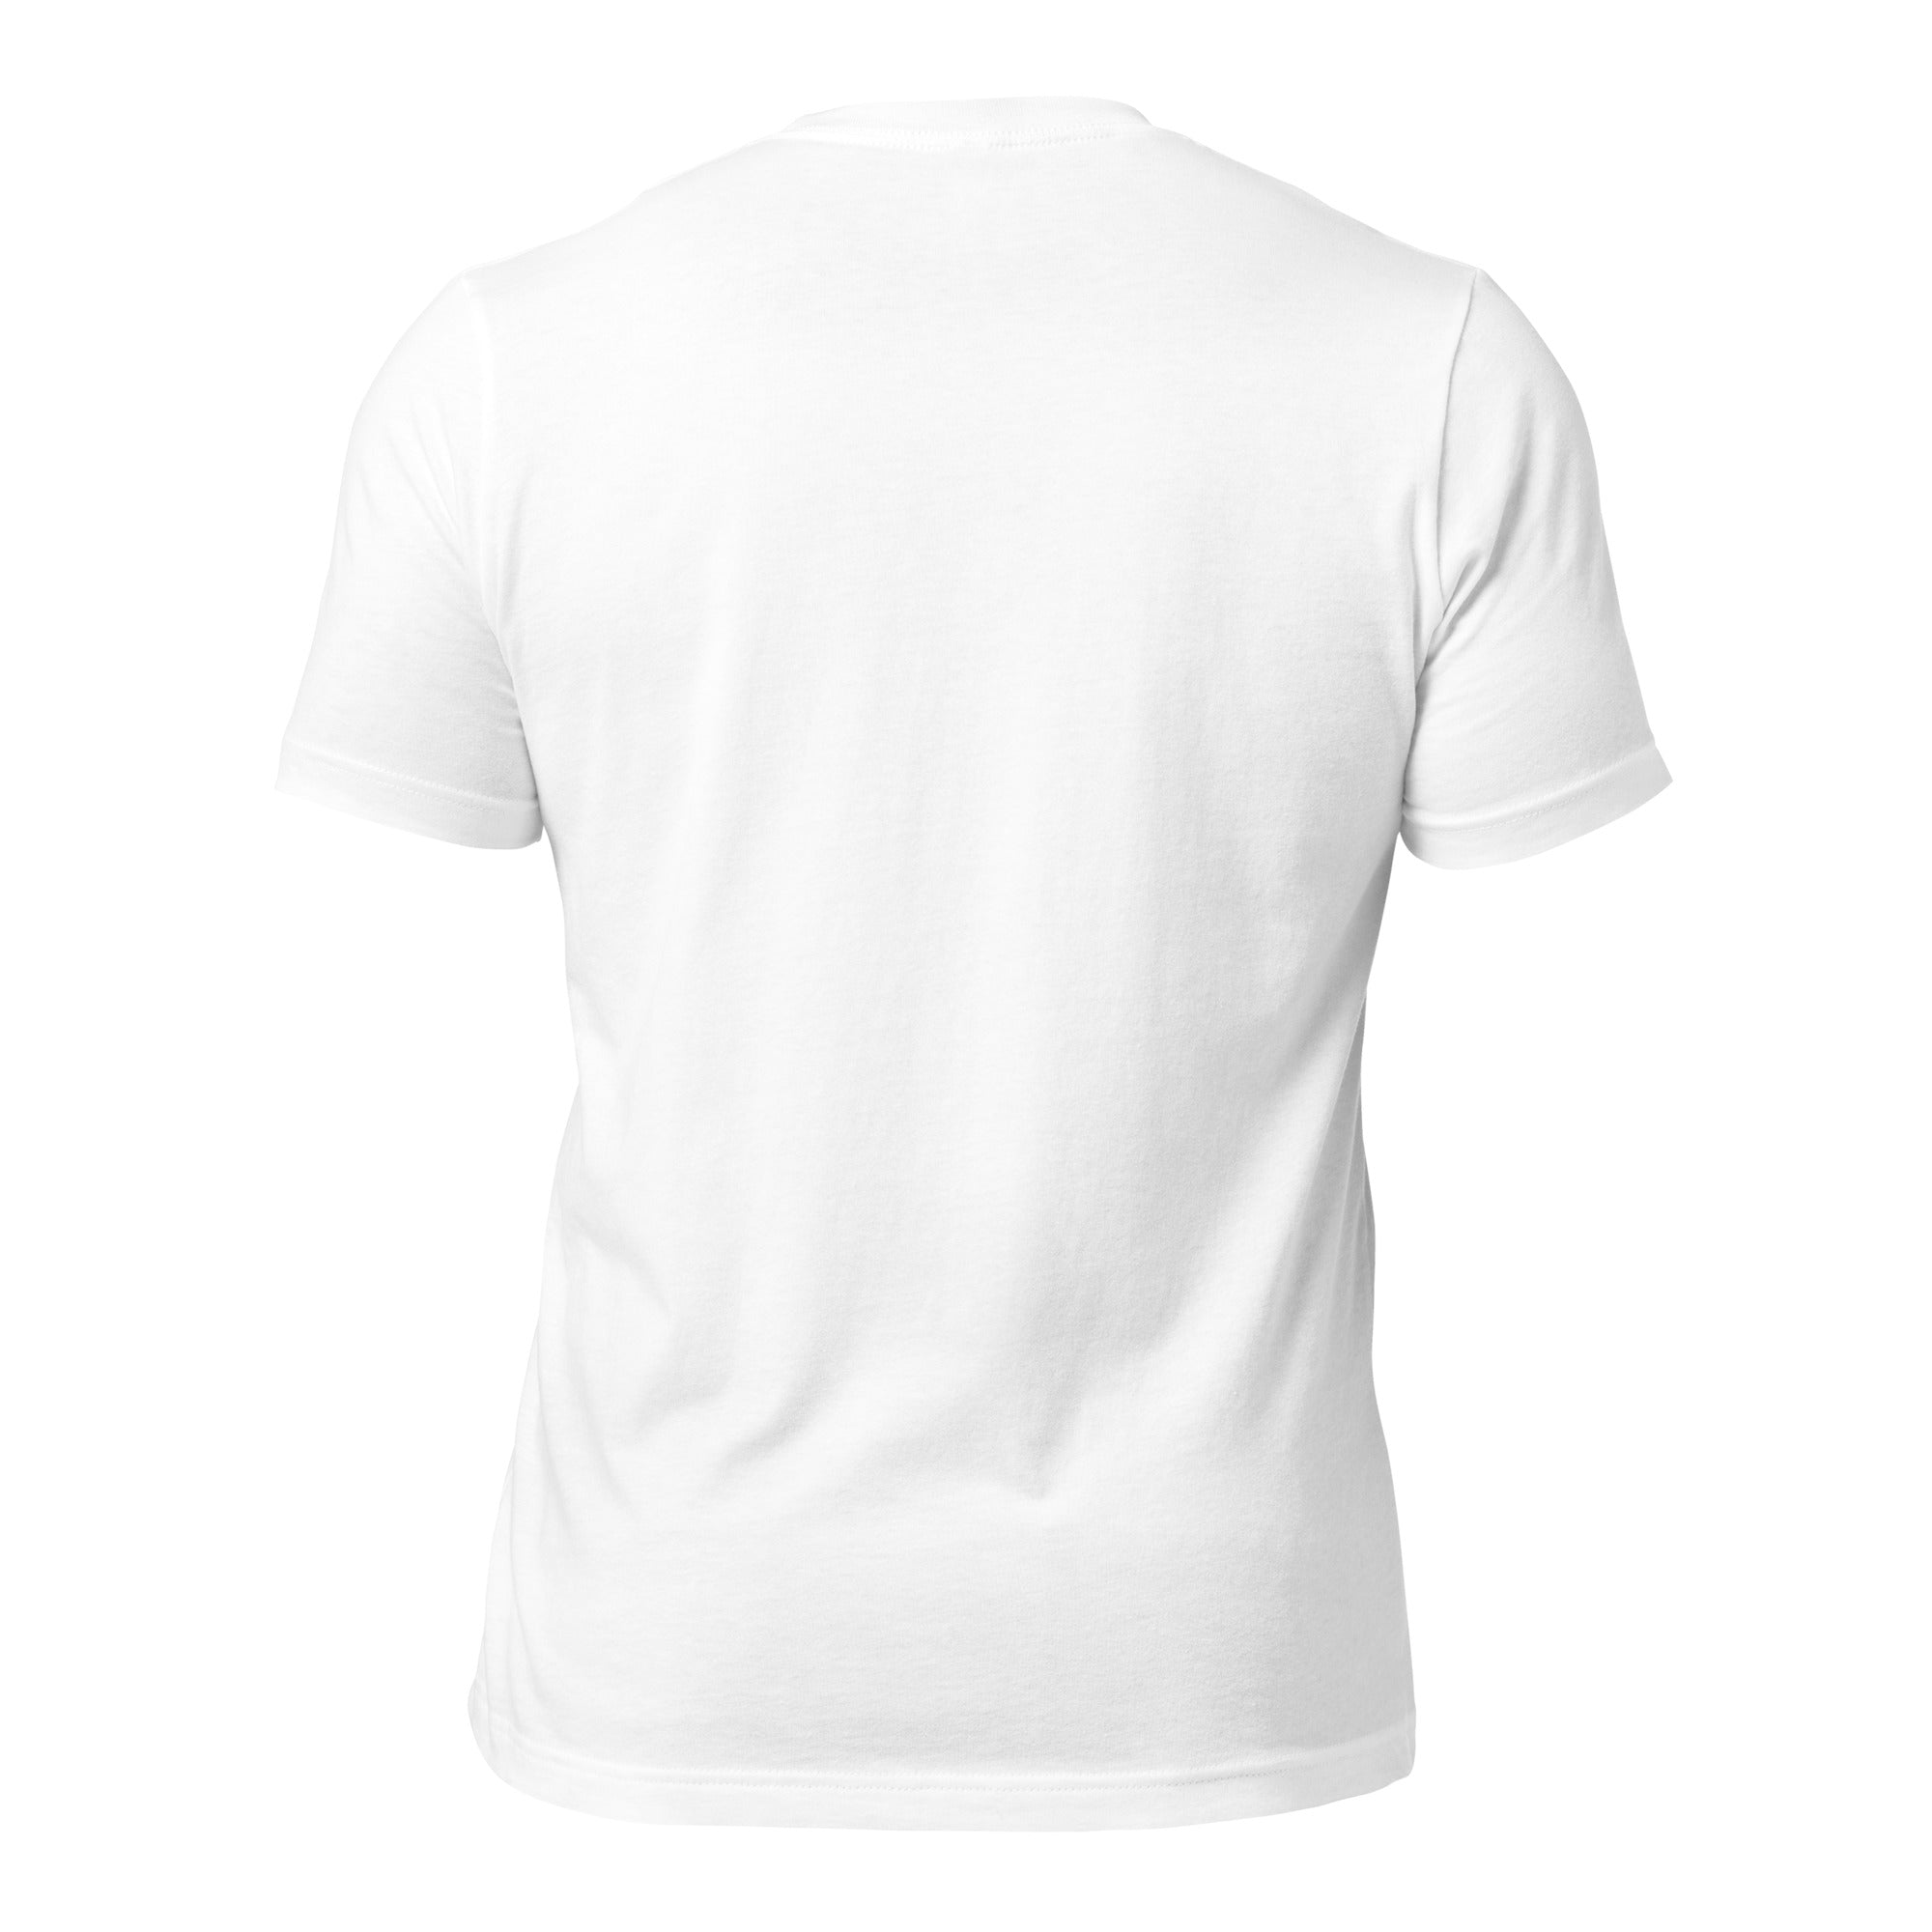 American Cocker Spaniel - Short Sleeve Cotton Tee  Shirt